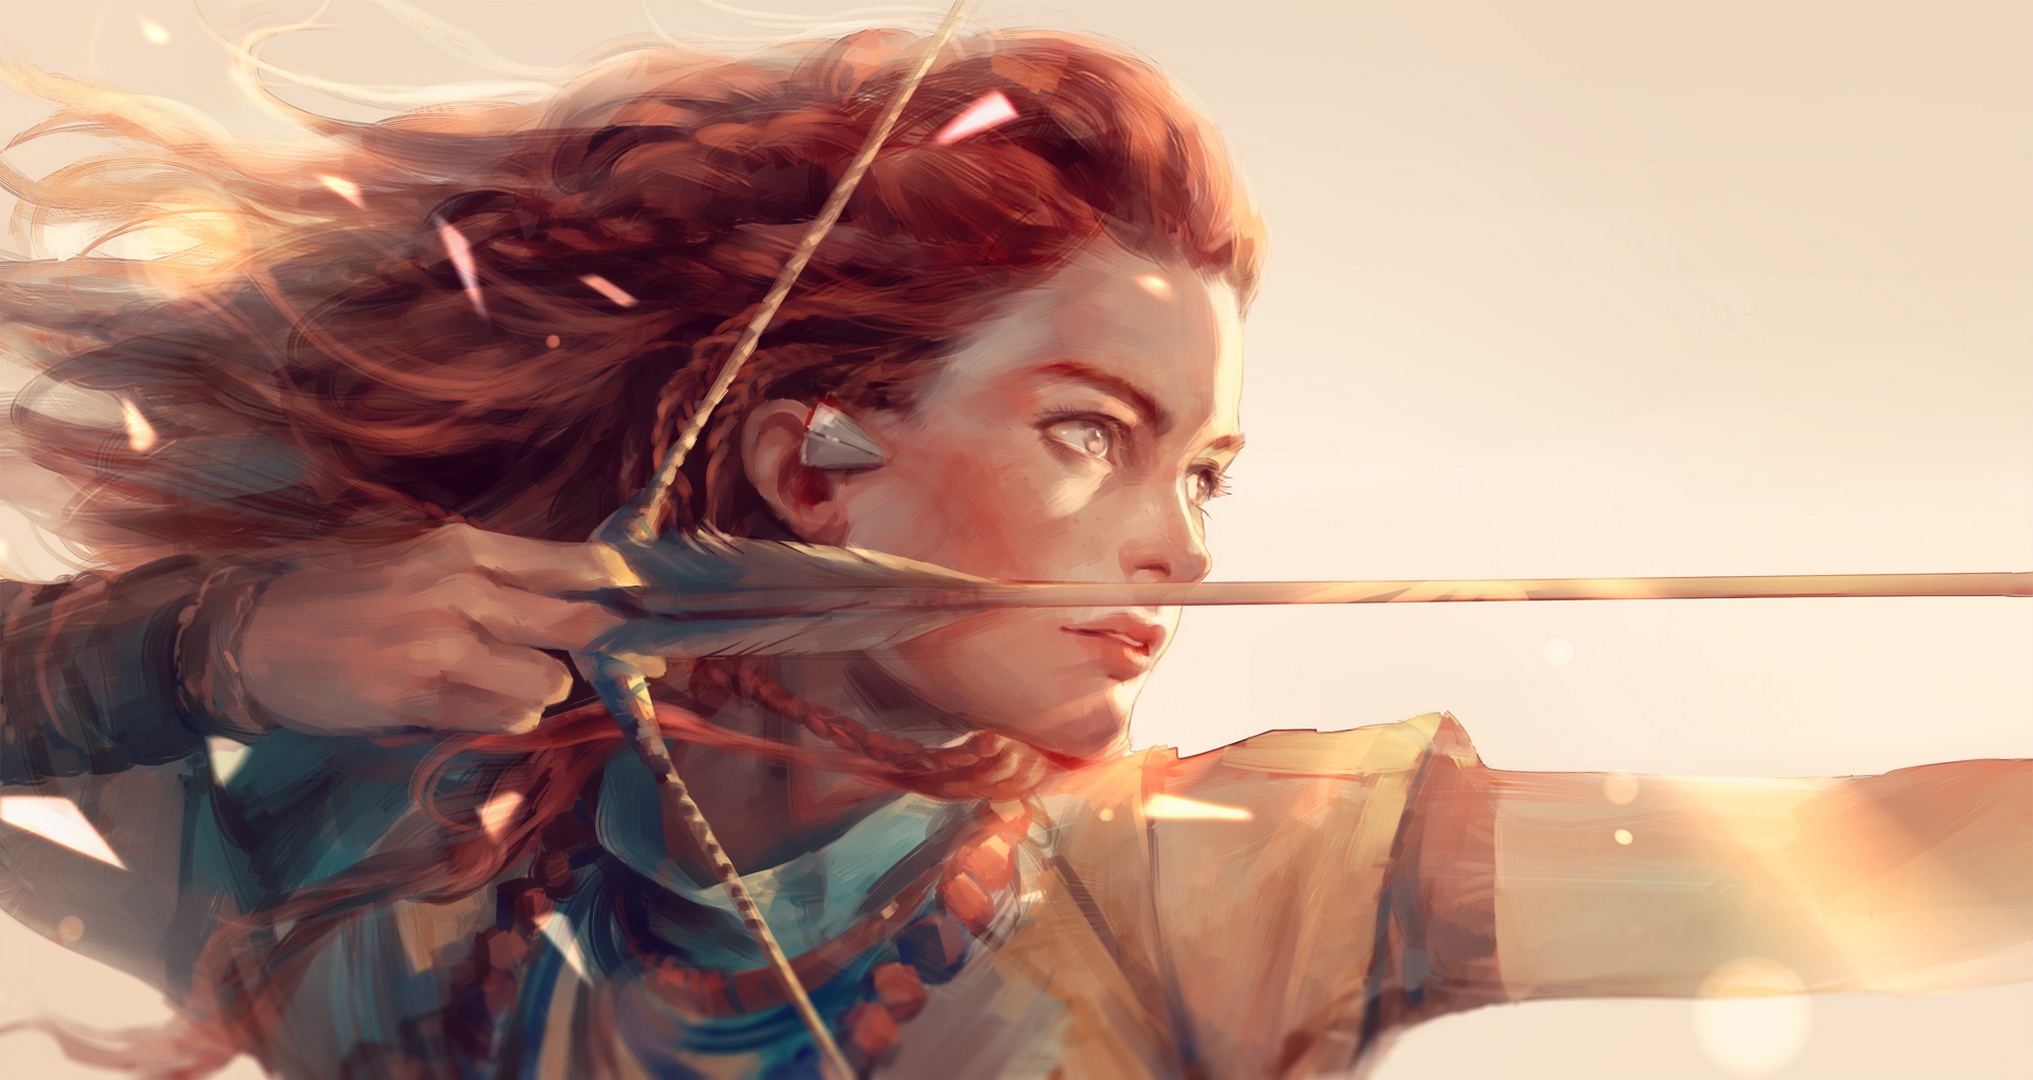 horizon zero dawn, aloy (horizon series), video game, braid, red hair, woman warrior